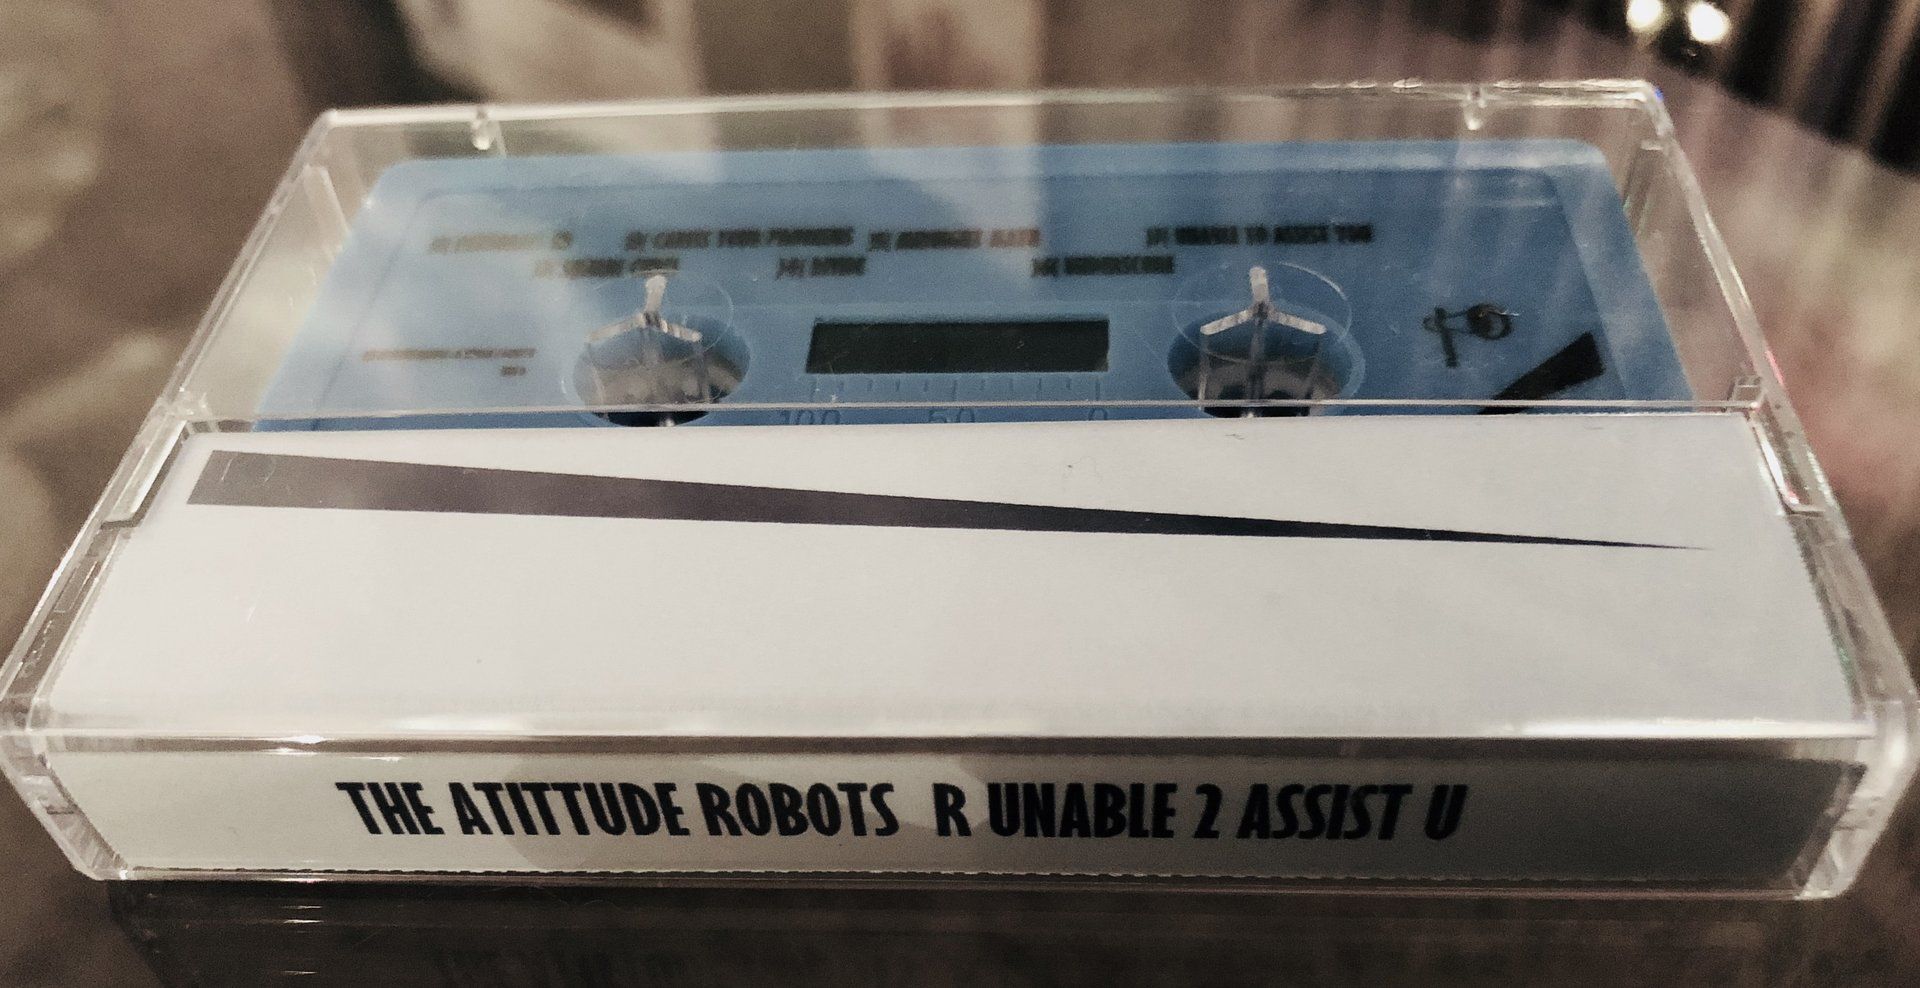 THE ATTITUDE ROBOTS R UNABLE 2 ASSIST U - $5